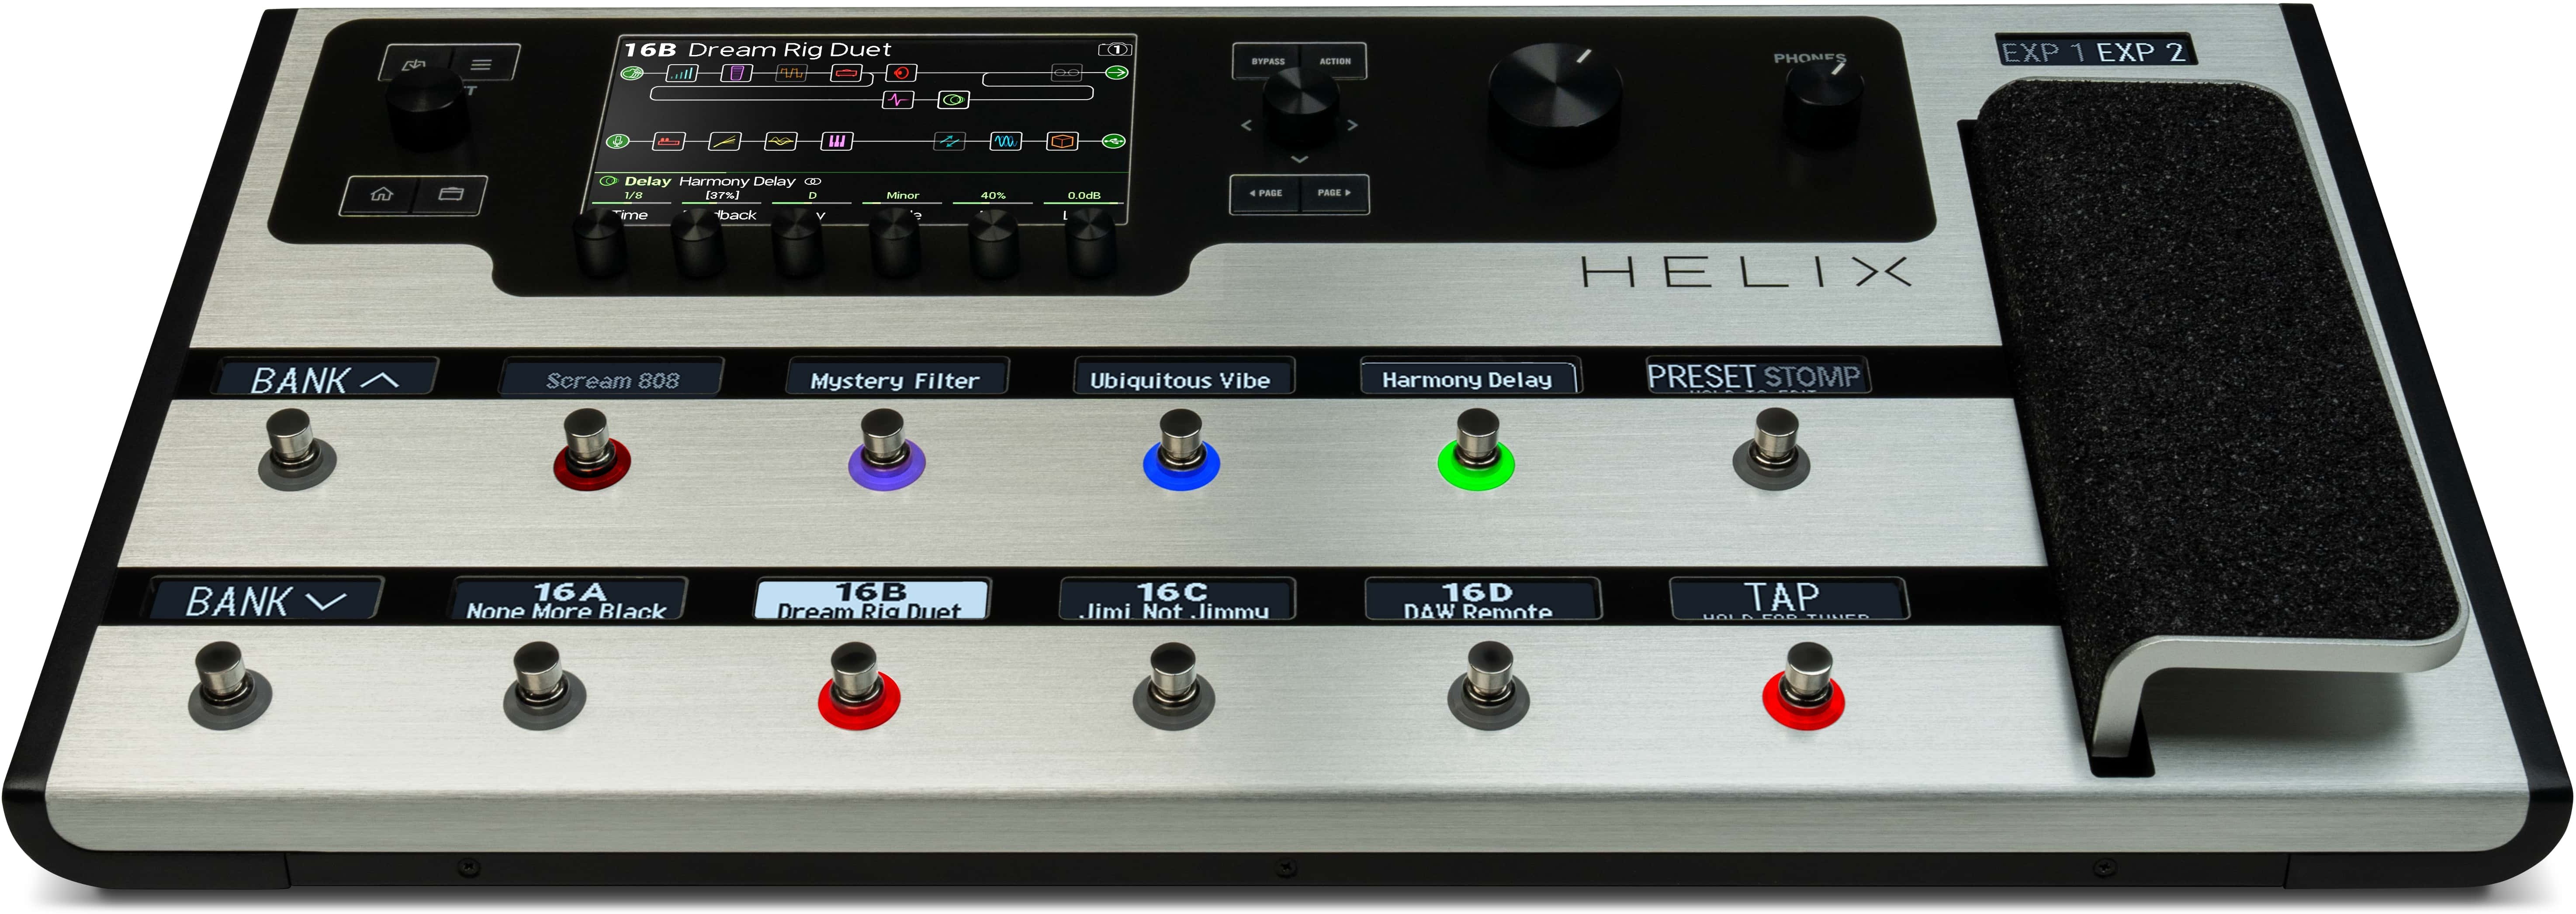 Line 6 Helix Floor Limited Edition Platinum Guitar Processor - Guitar amp modeling simulation - Main picture